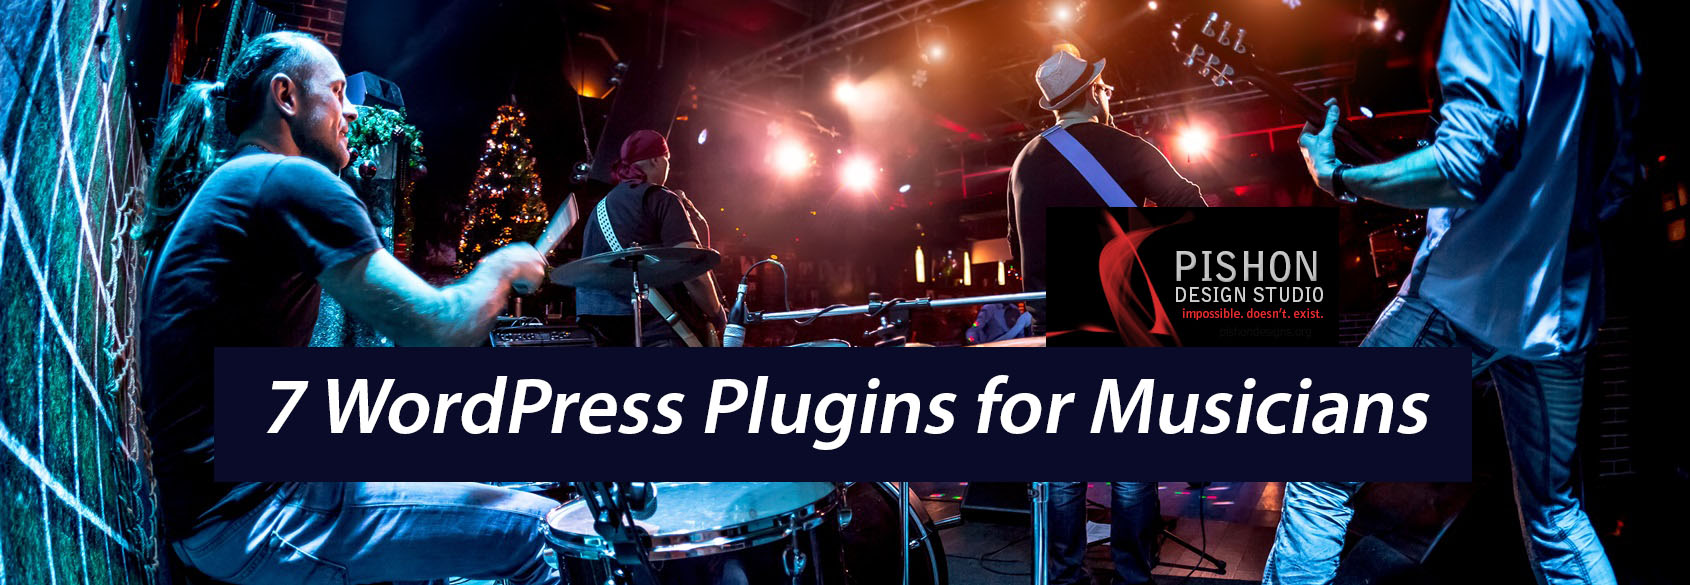 7 WordPress Plugins for Musicians 